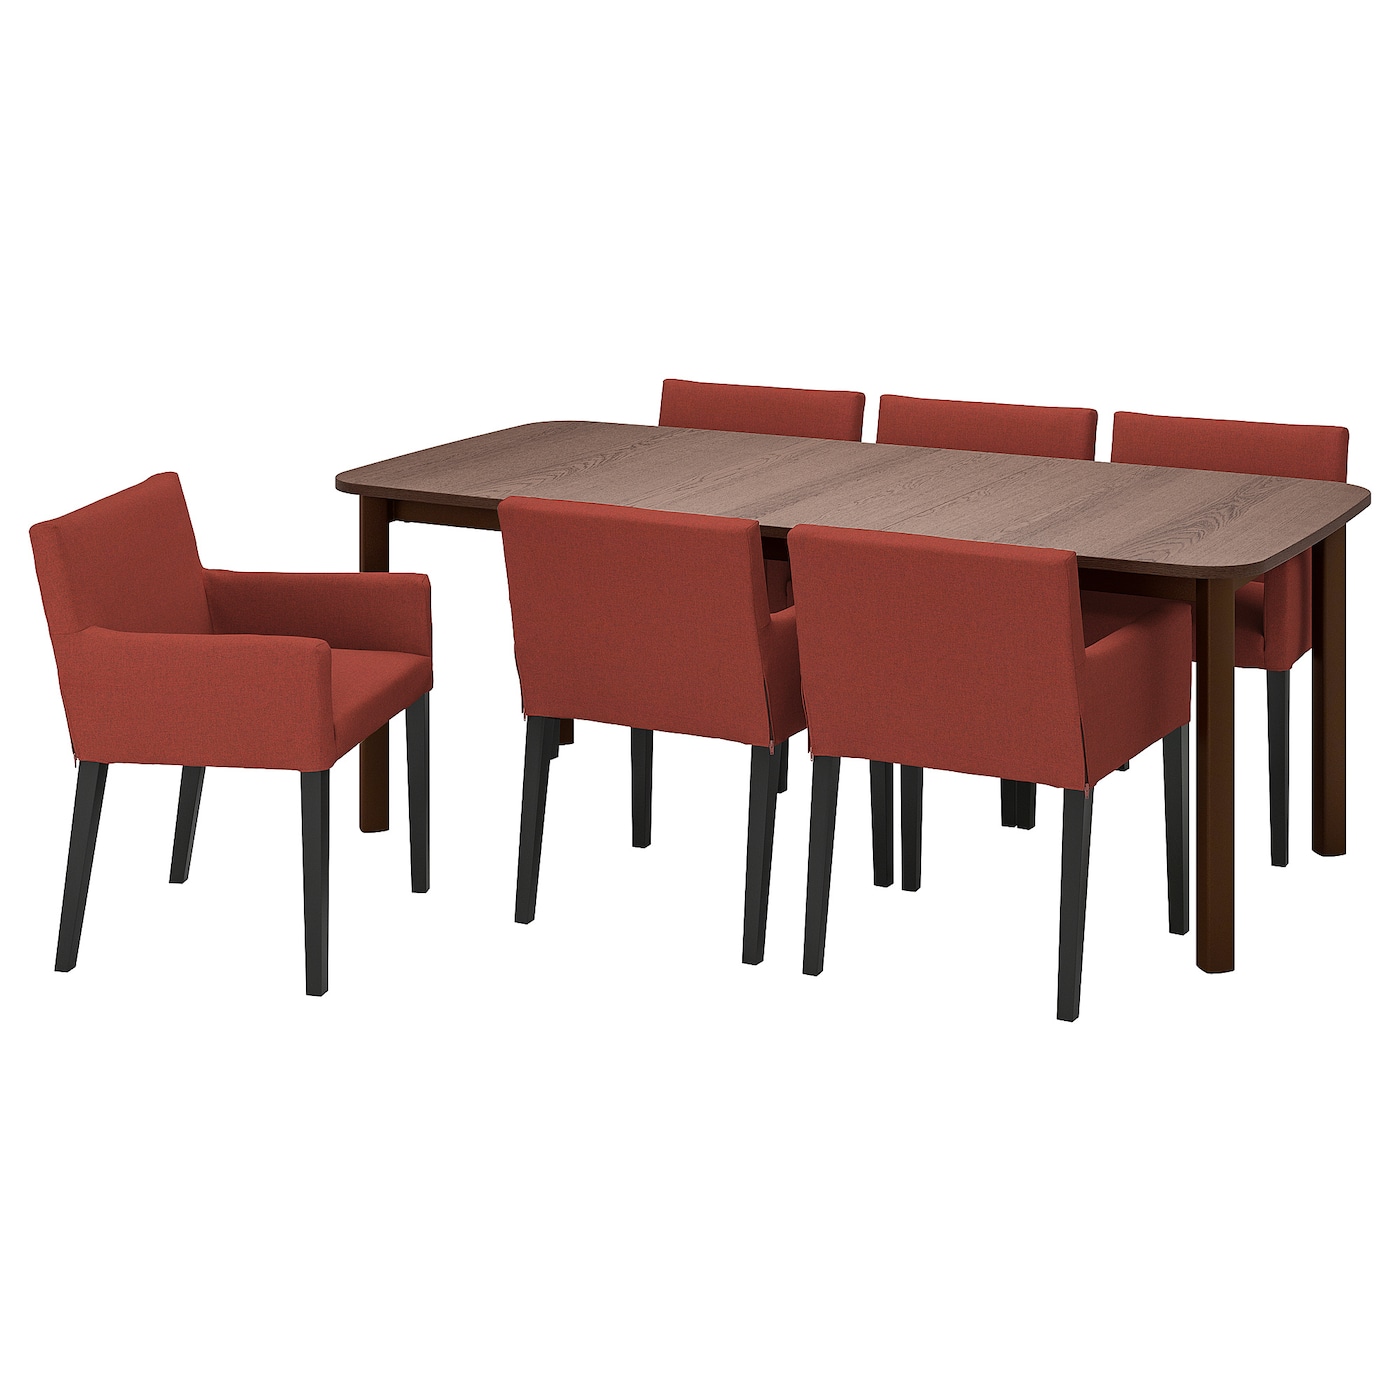 Стол и 6 стульев - STRANDTORP / MÅRENÄS IKEA/СТРАНДТОРП/МАРЕНЭС   ИКЕА, 205х95х75 см, коричневый/красный